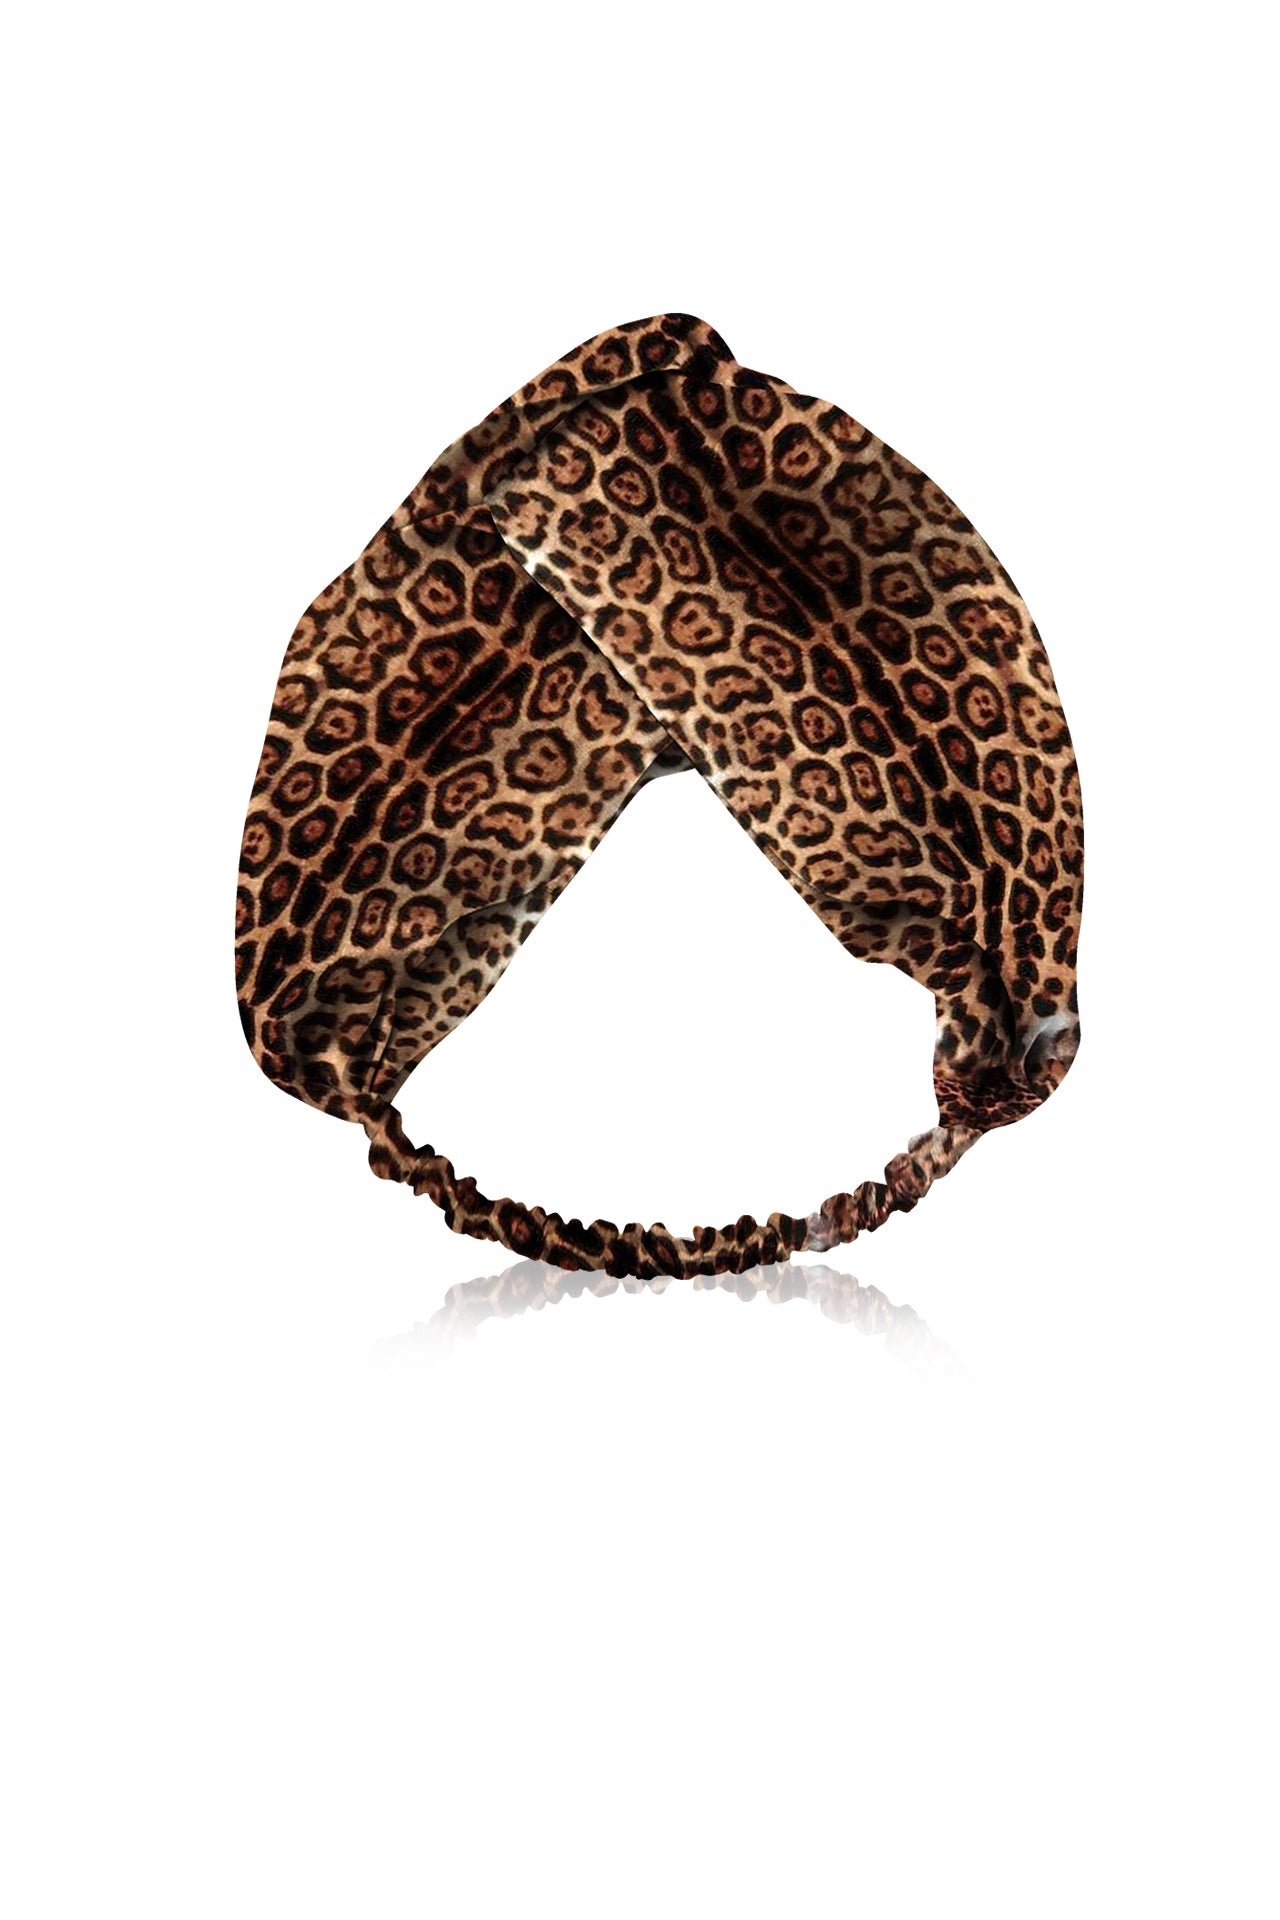 Dorit Kemsley Headband & Headwrap